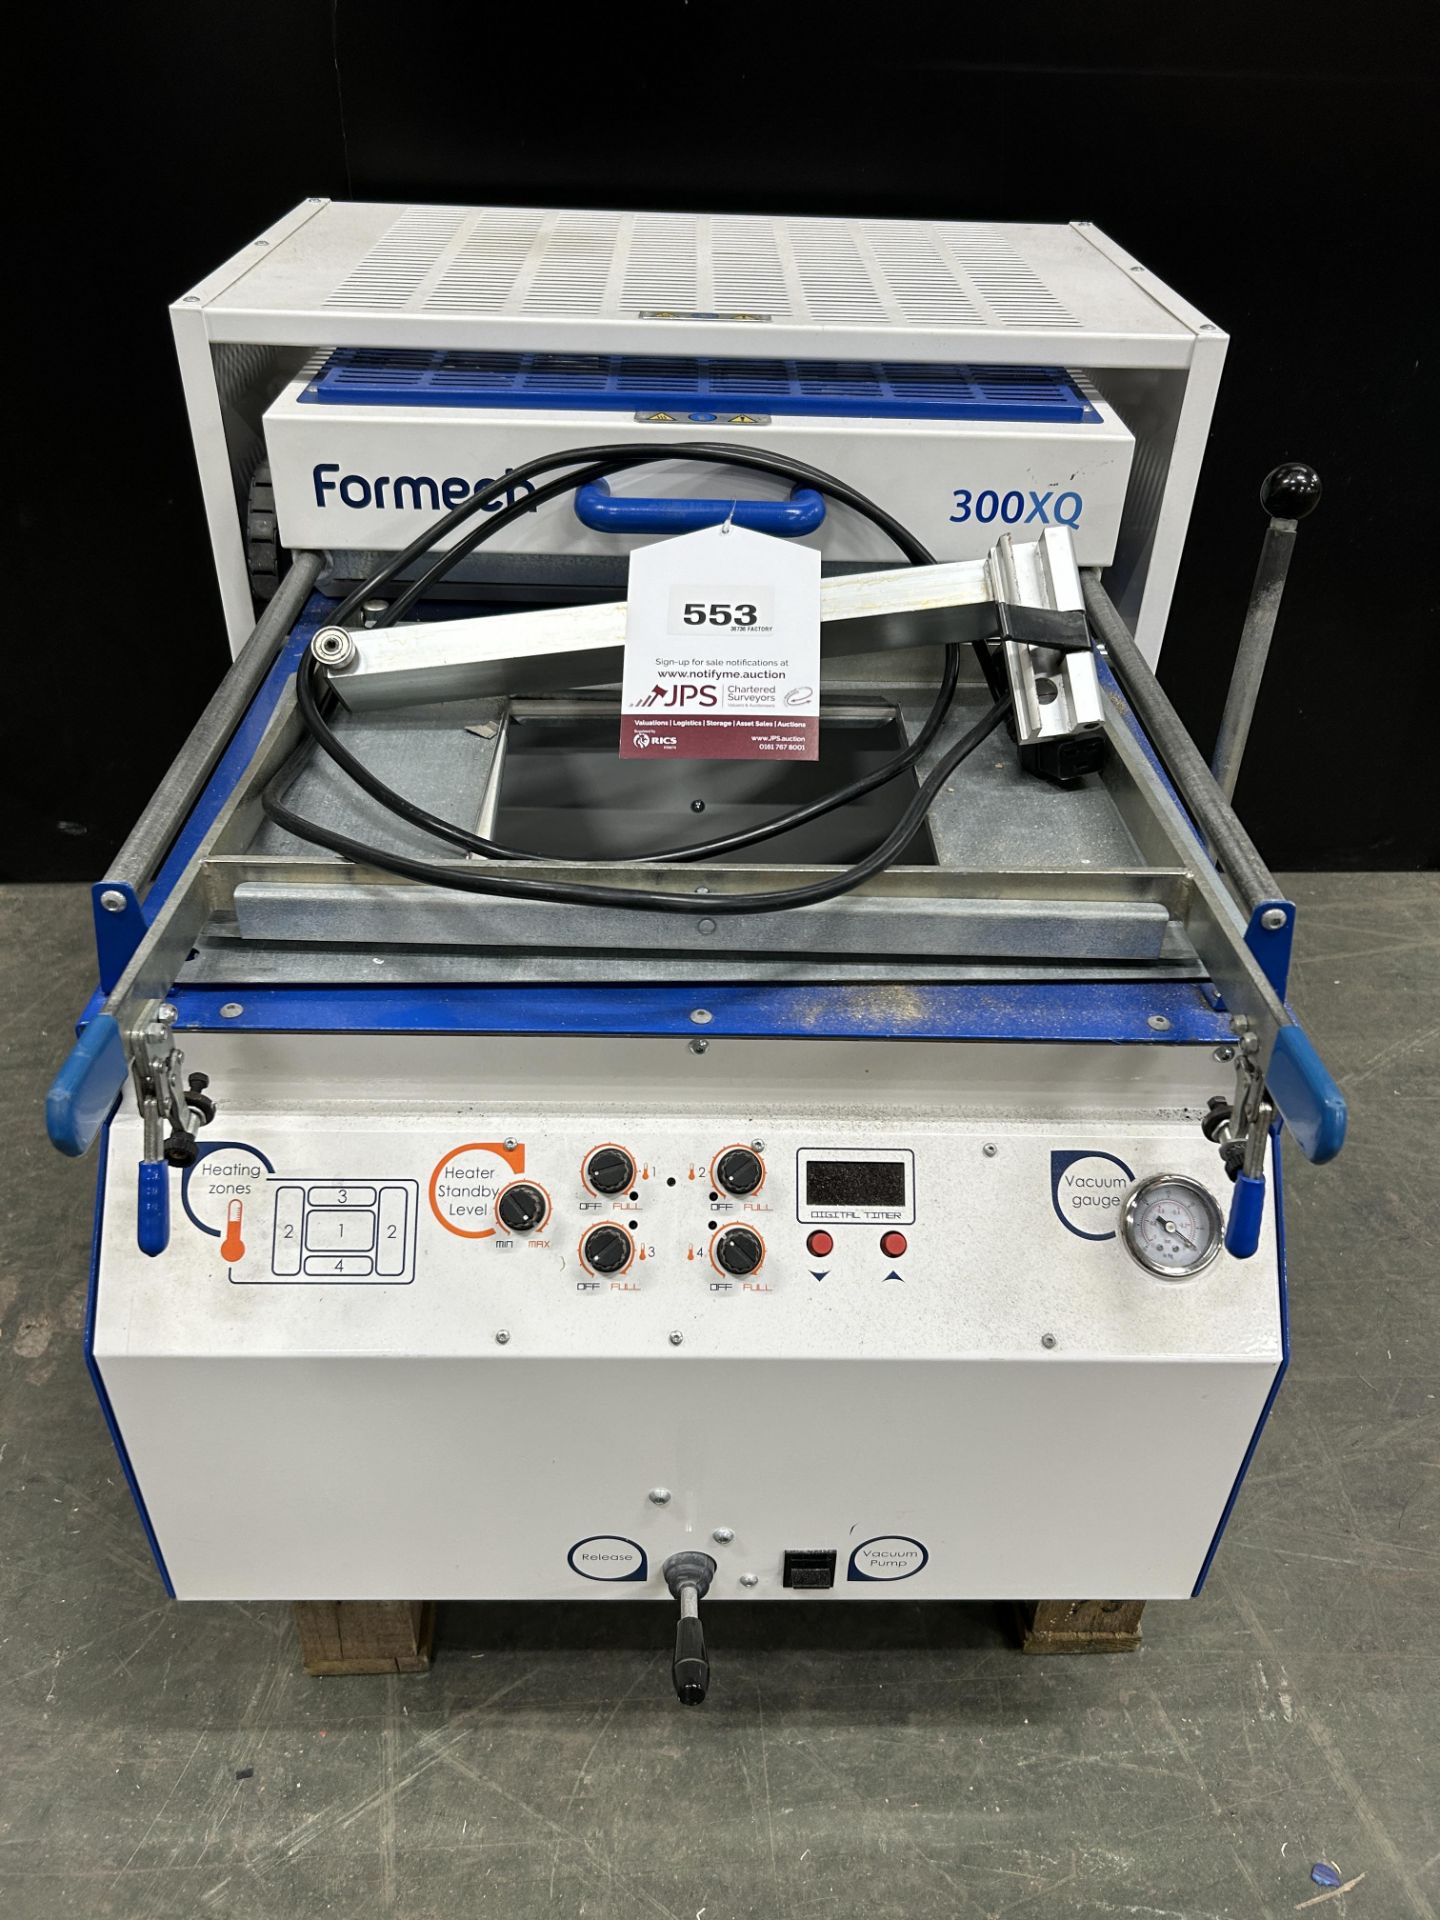 Formech 300 XG vacuum former